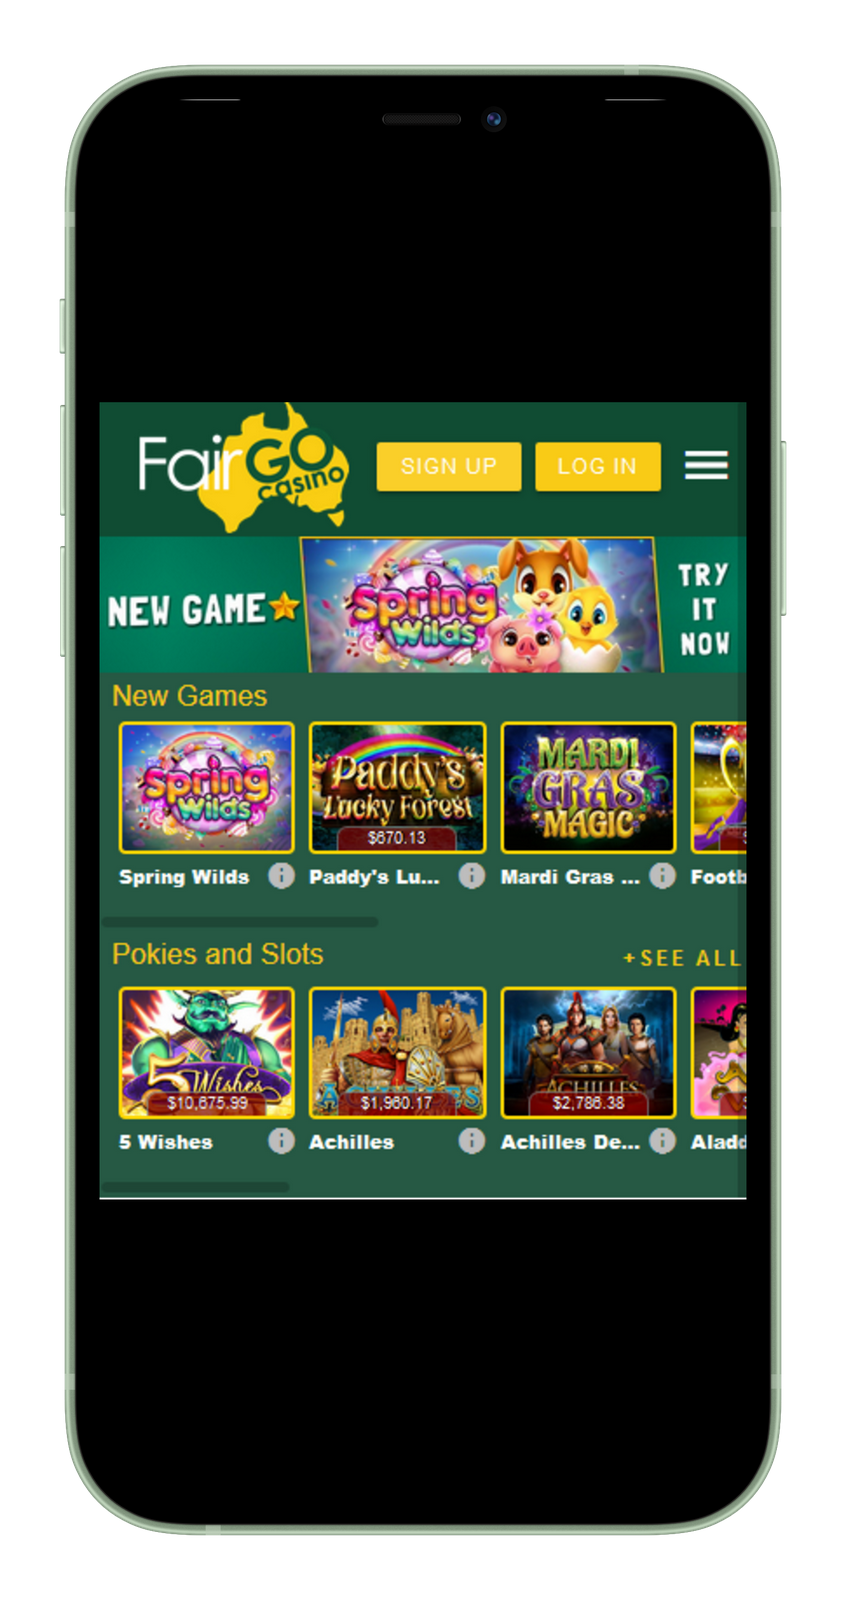 CDK.Fair Go Casino Online: A Comprehensive Guide for Australian Players